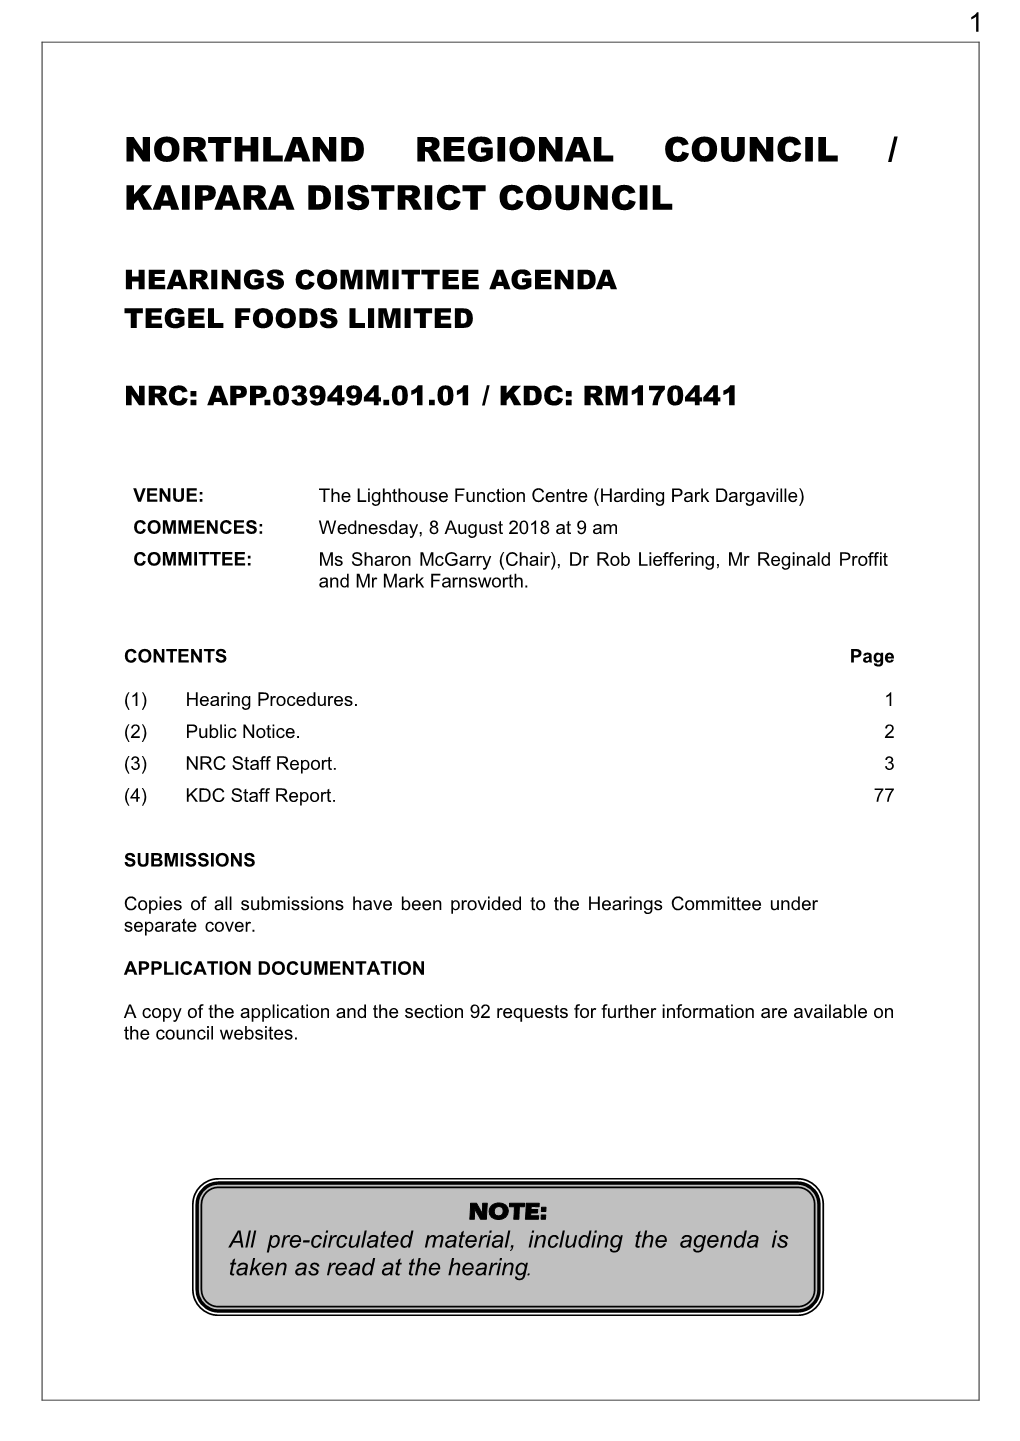 Northland Regional Council / Kaipara District Council